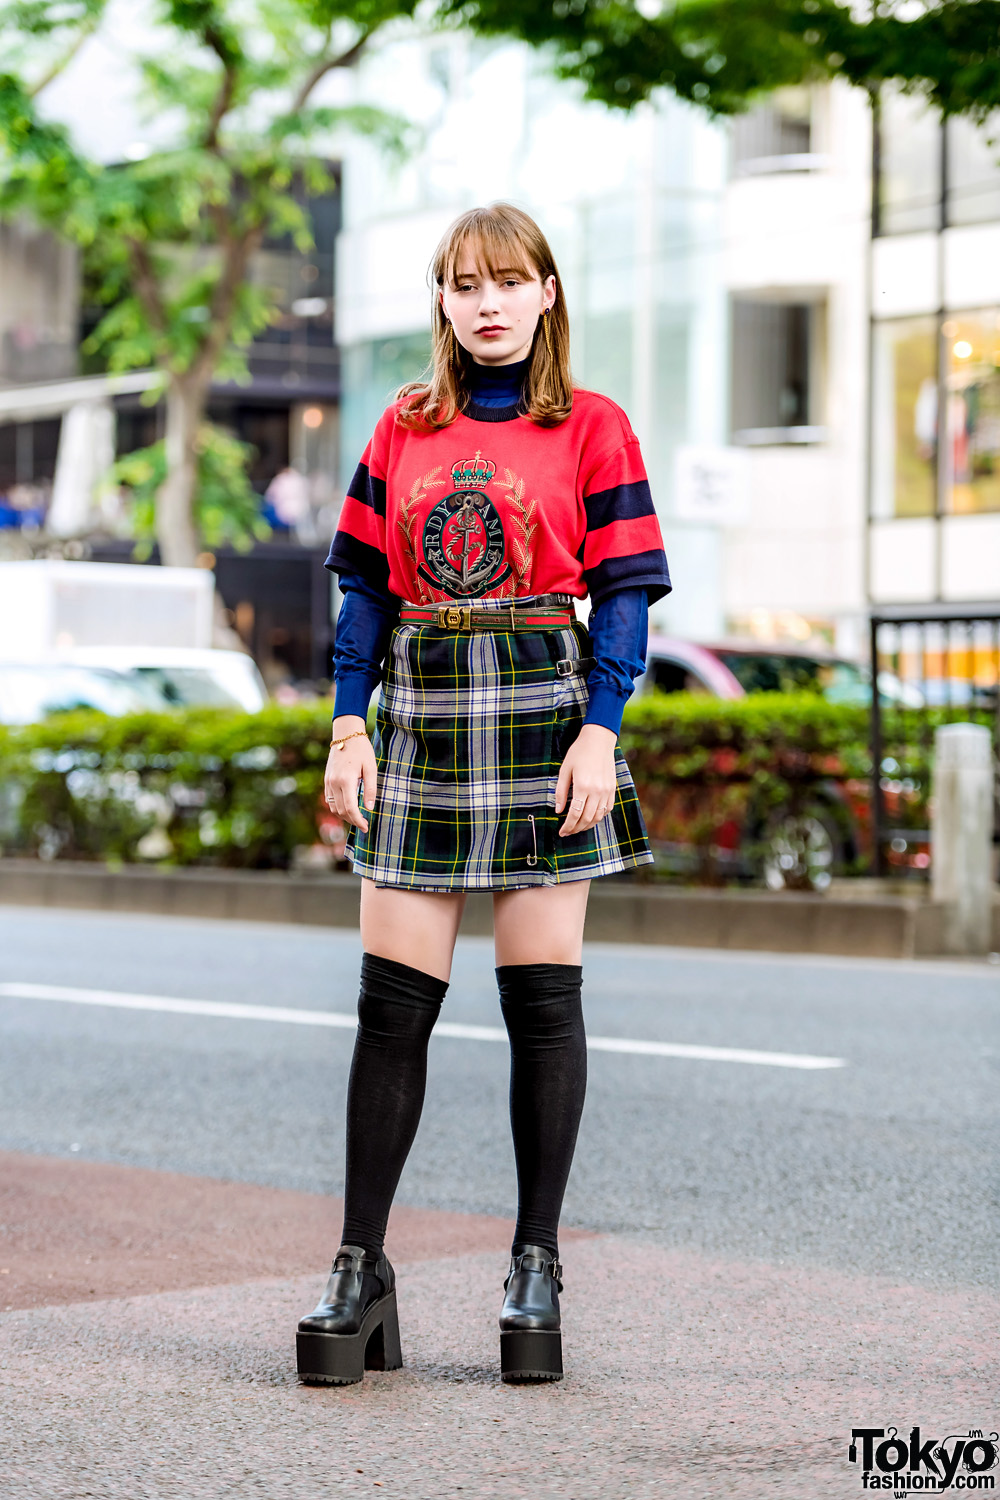 Japanese Vintage Street Style w/ Hardy Amies Knit Top, Plaid Skirt, Gucci Belt & Bubbles Platform T-Strap Shoes